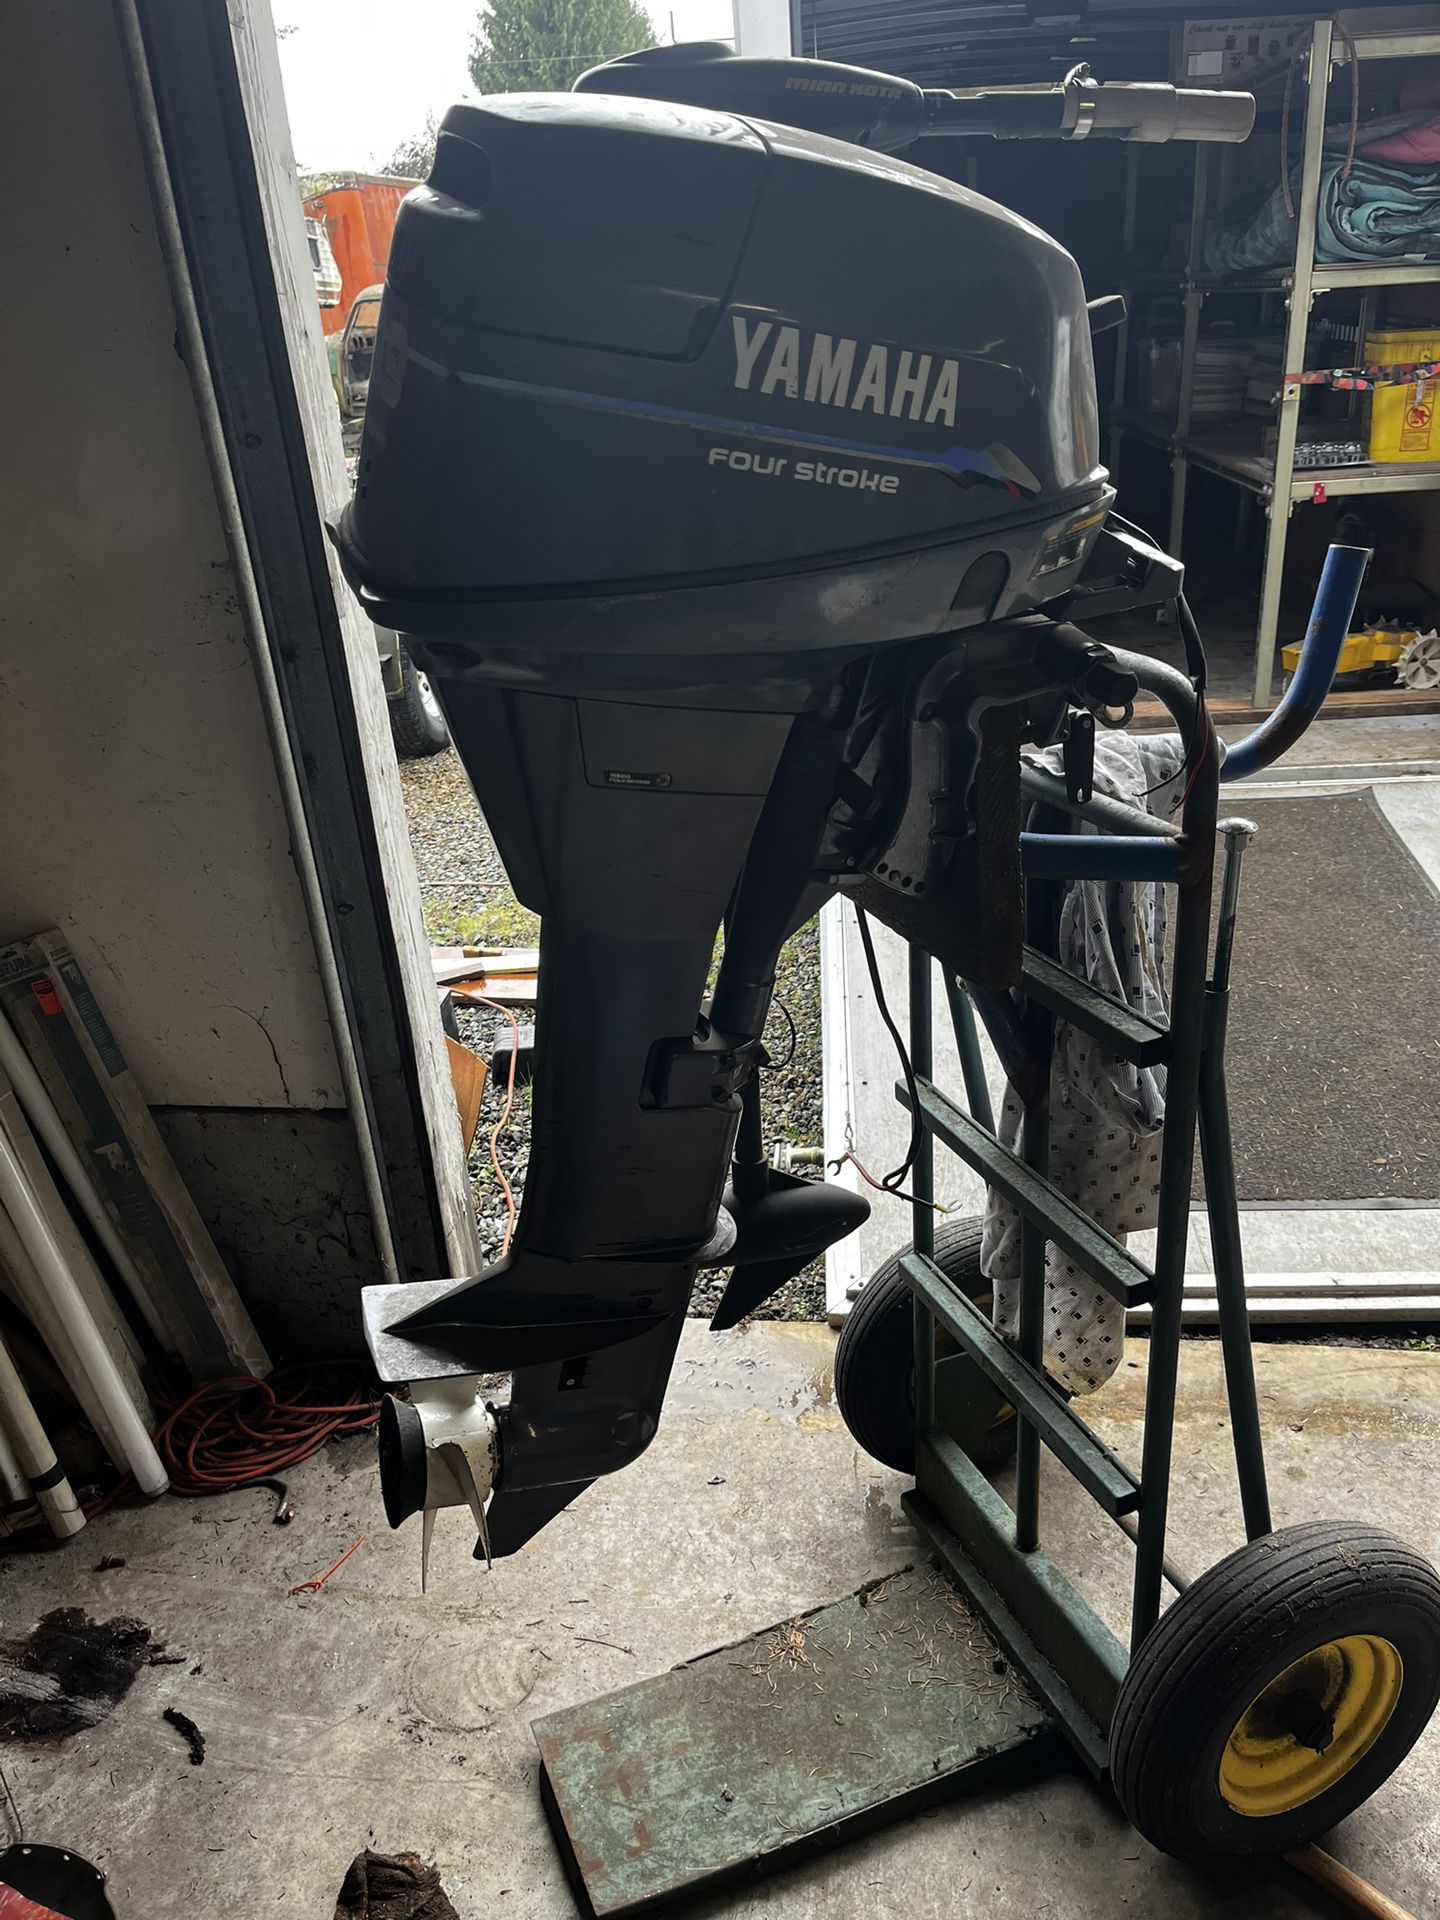 Yamaha 9.9 Four Stroke Outboard Motor